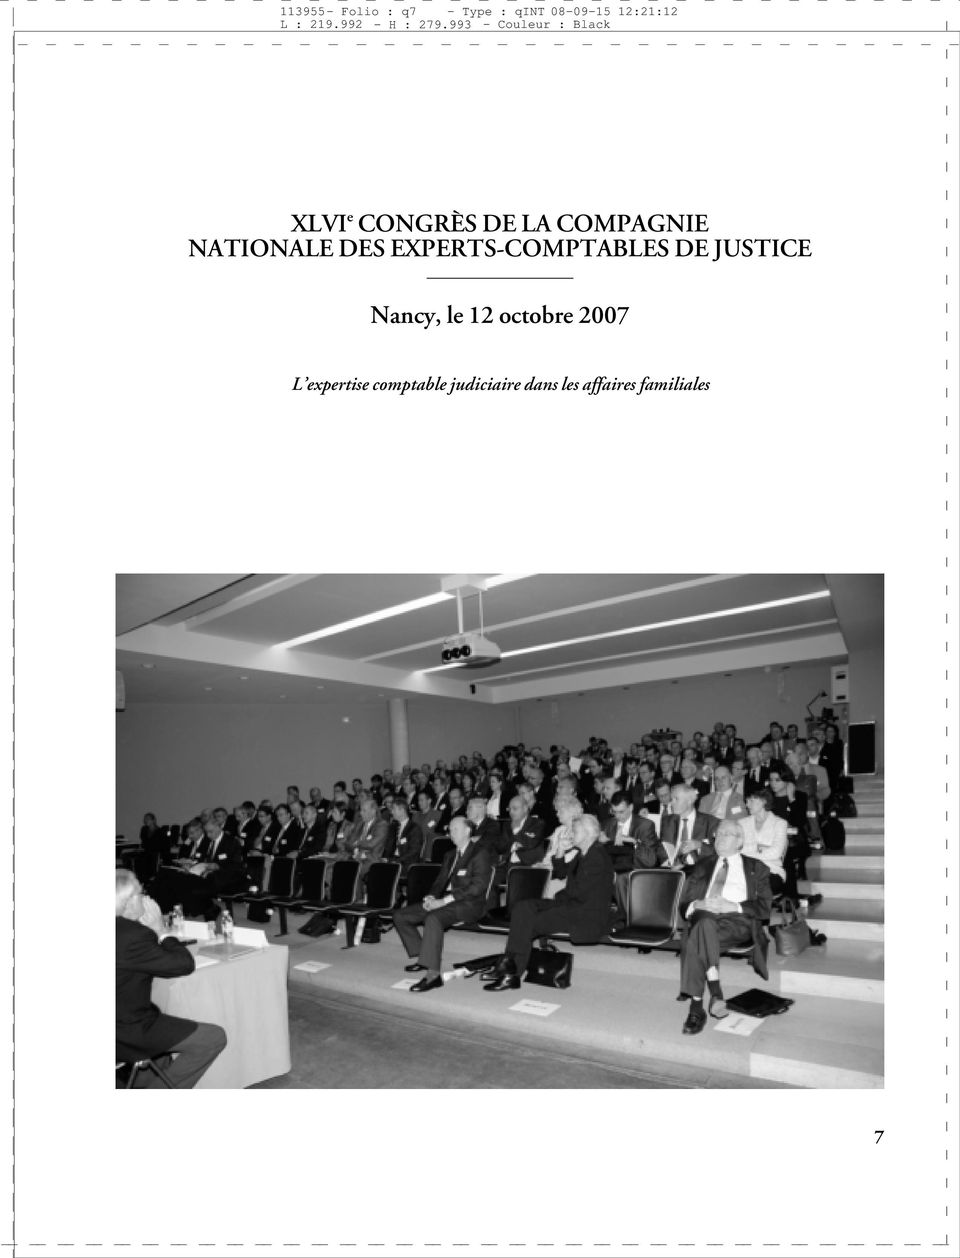 EXPERTS-COMPTABLES DE JUSTICE Nancy, le 12 octobre